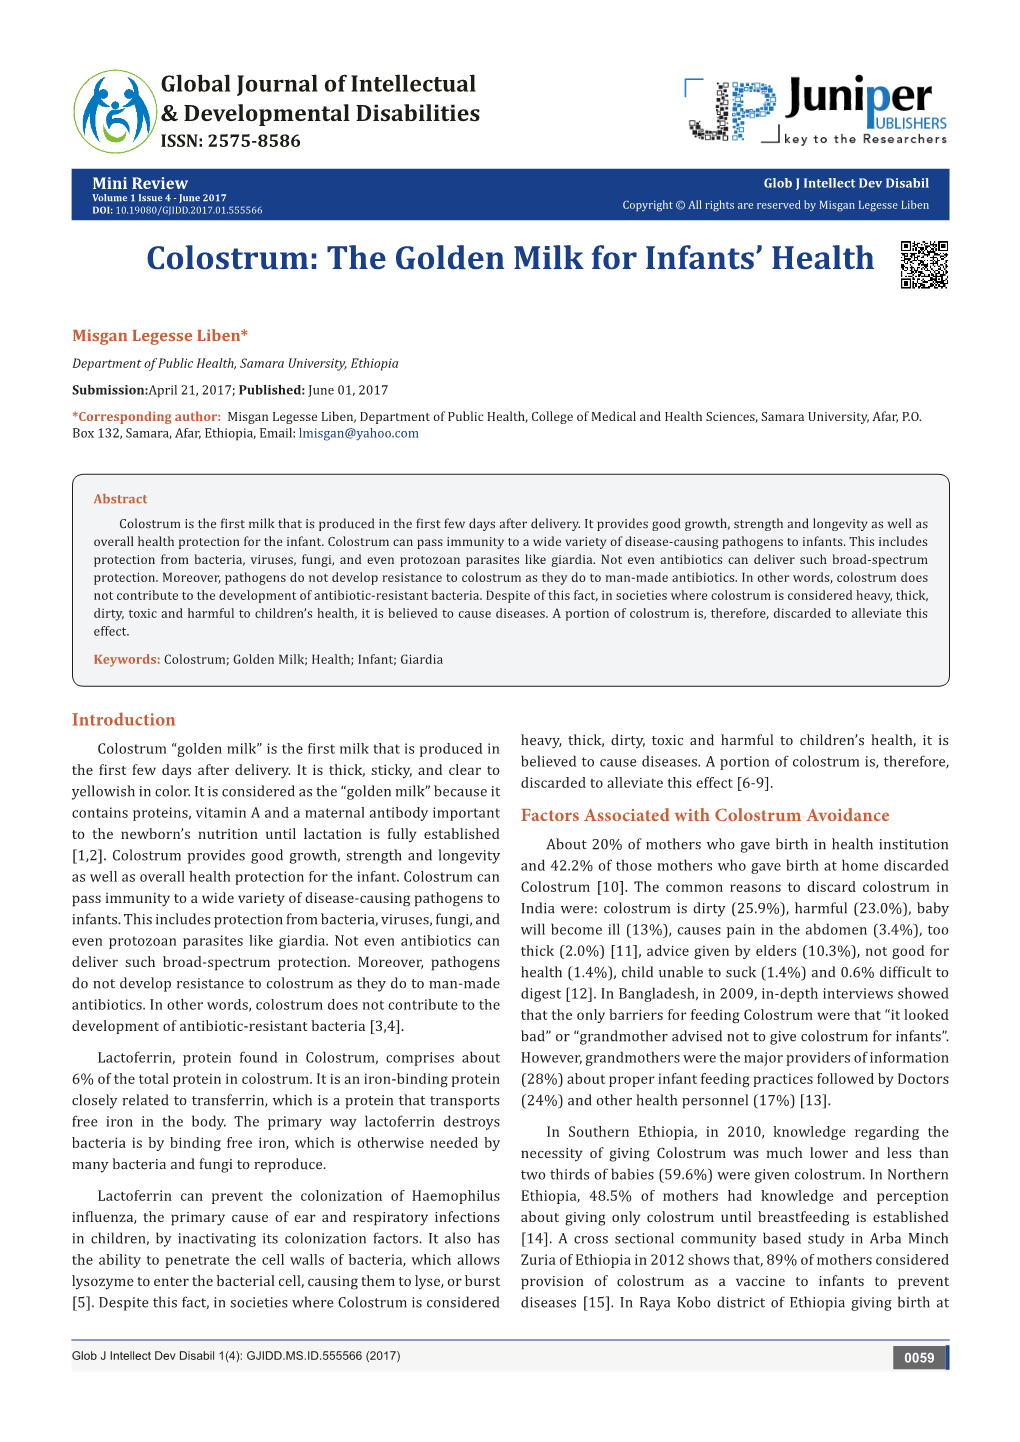 Colostrum: the Golden Milk for Infants' Health